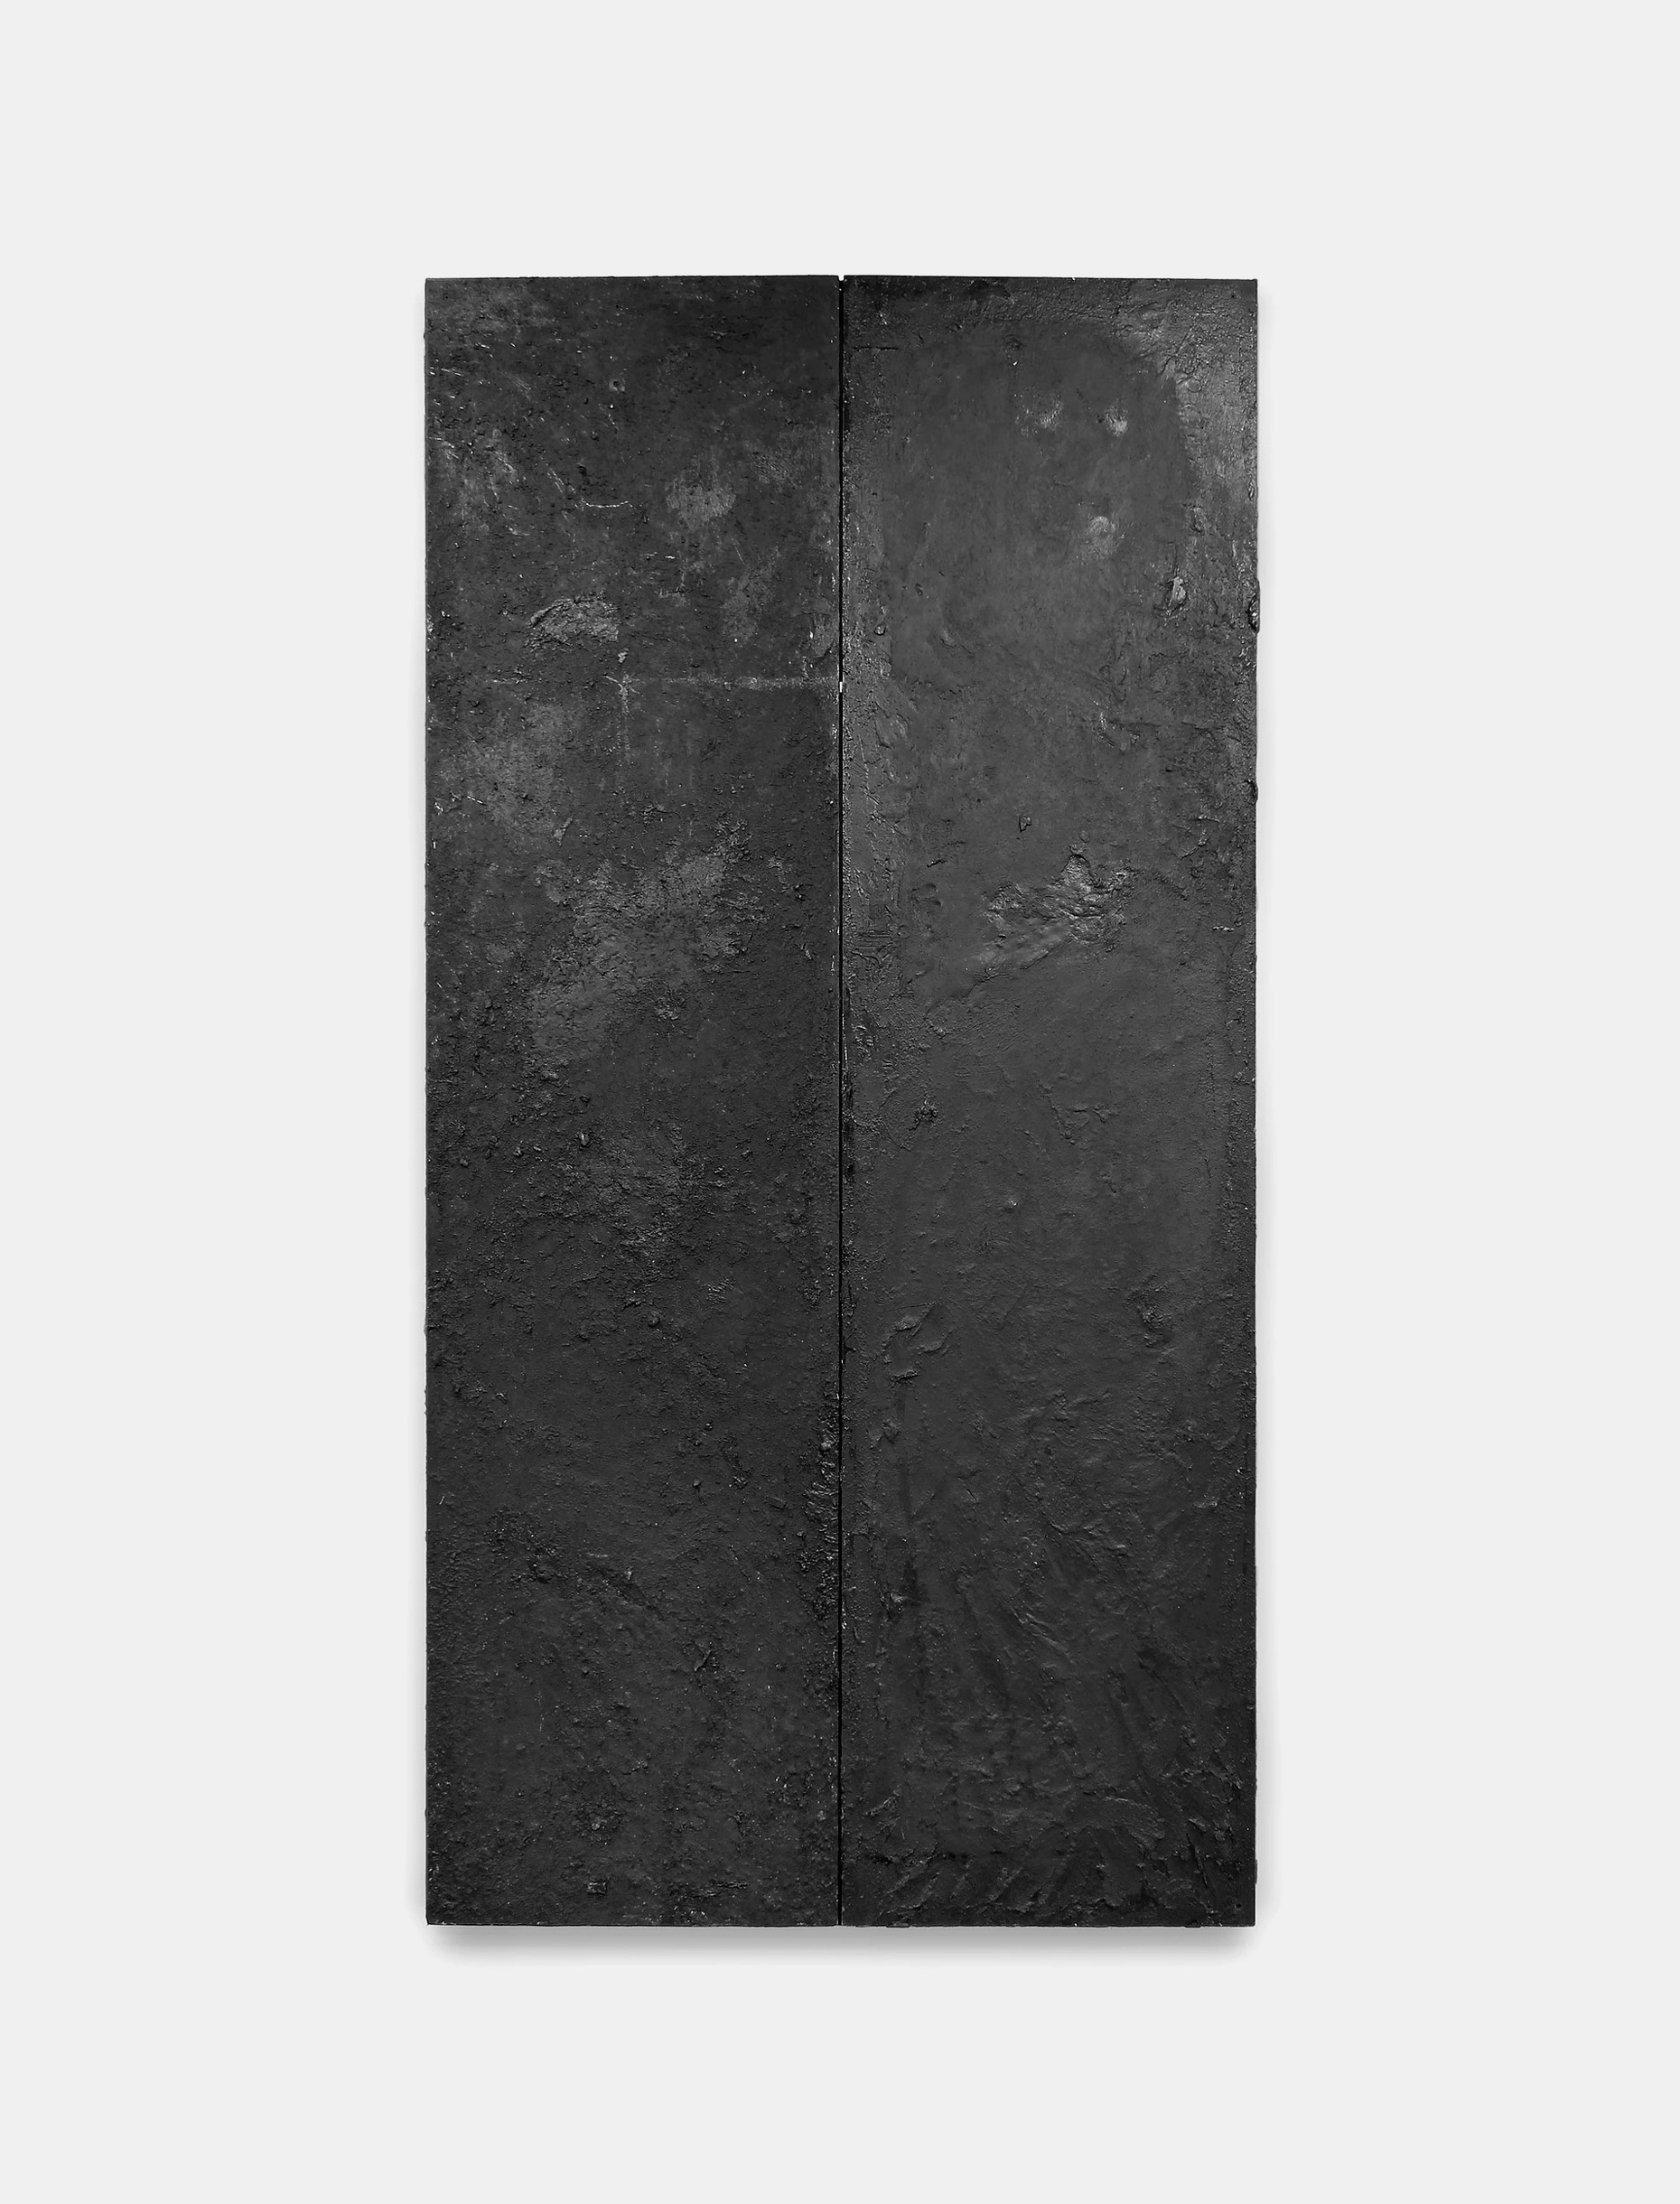 Eleanor Bartlett, Mater 2, 2020, Tar on prepared board, 244x122cm © The Artist, Image Courtesy Three Works